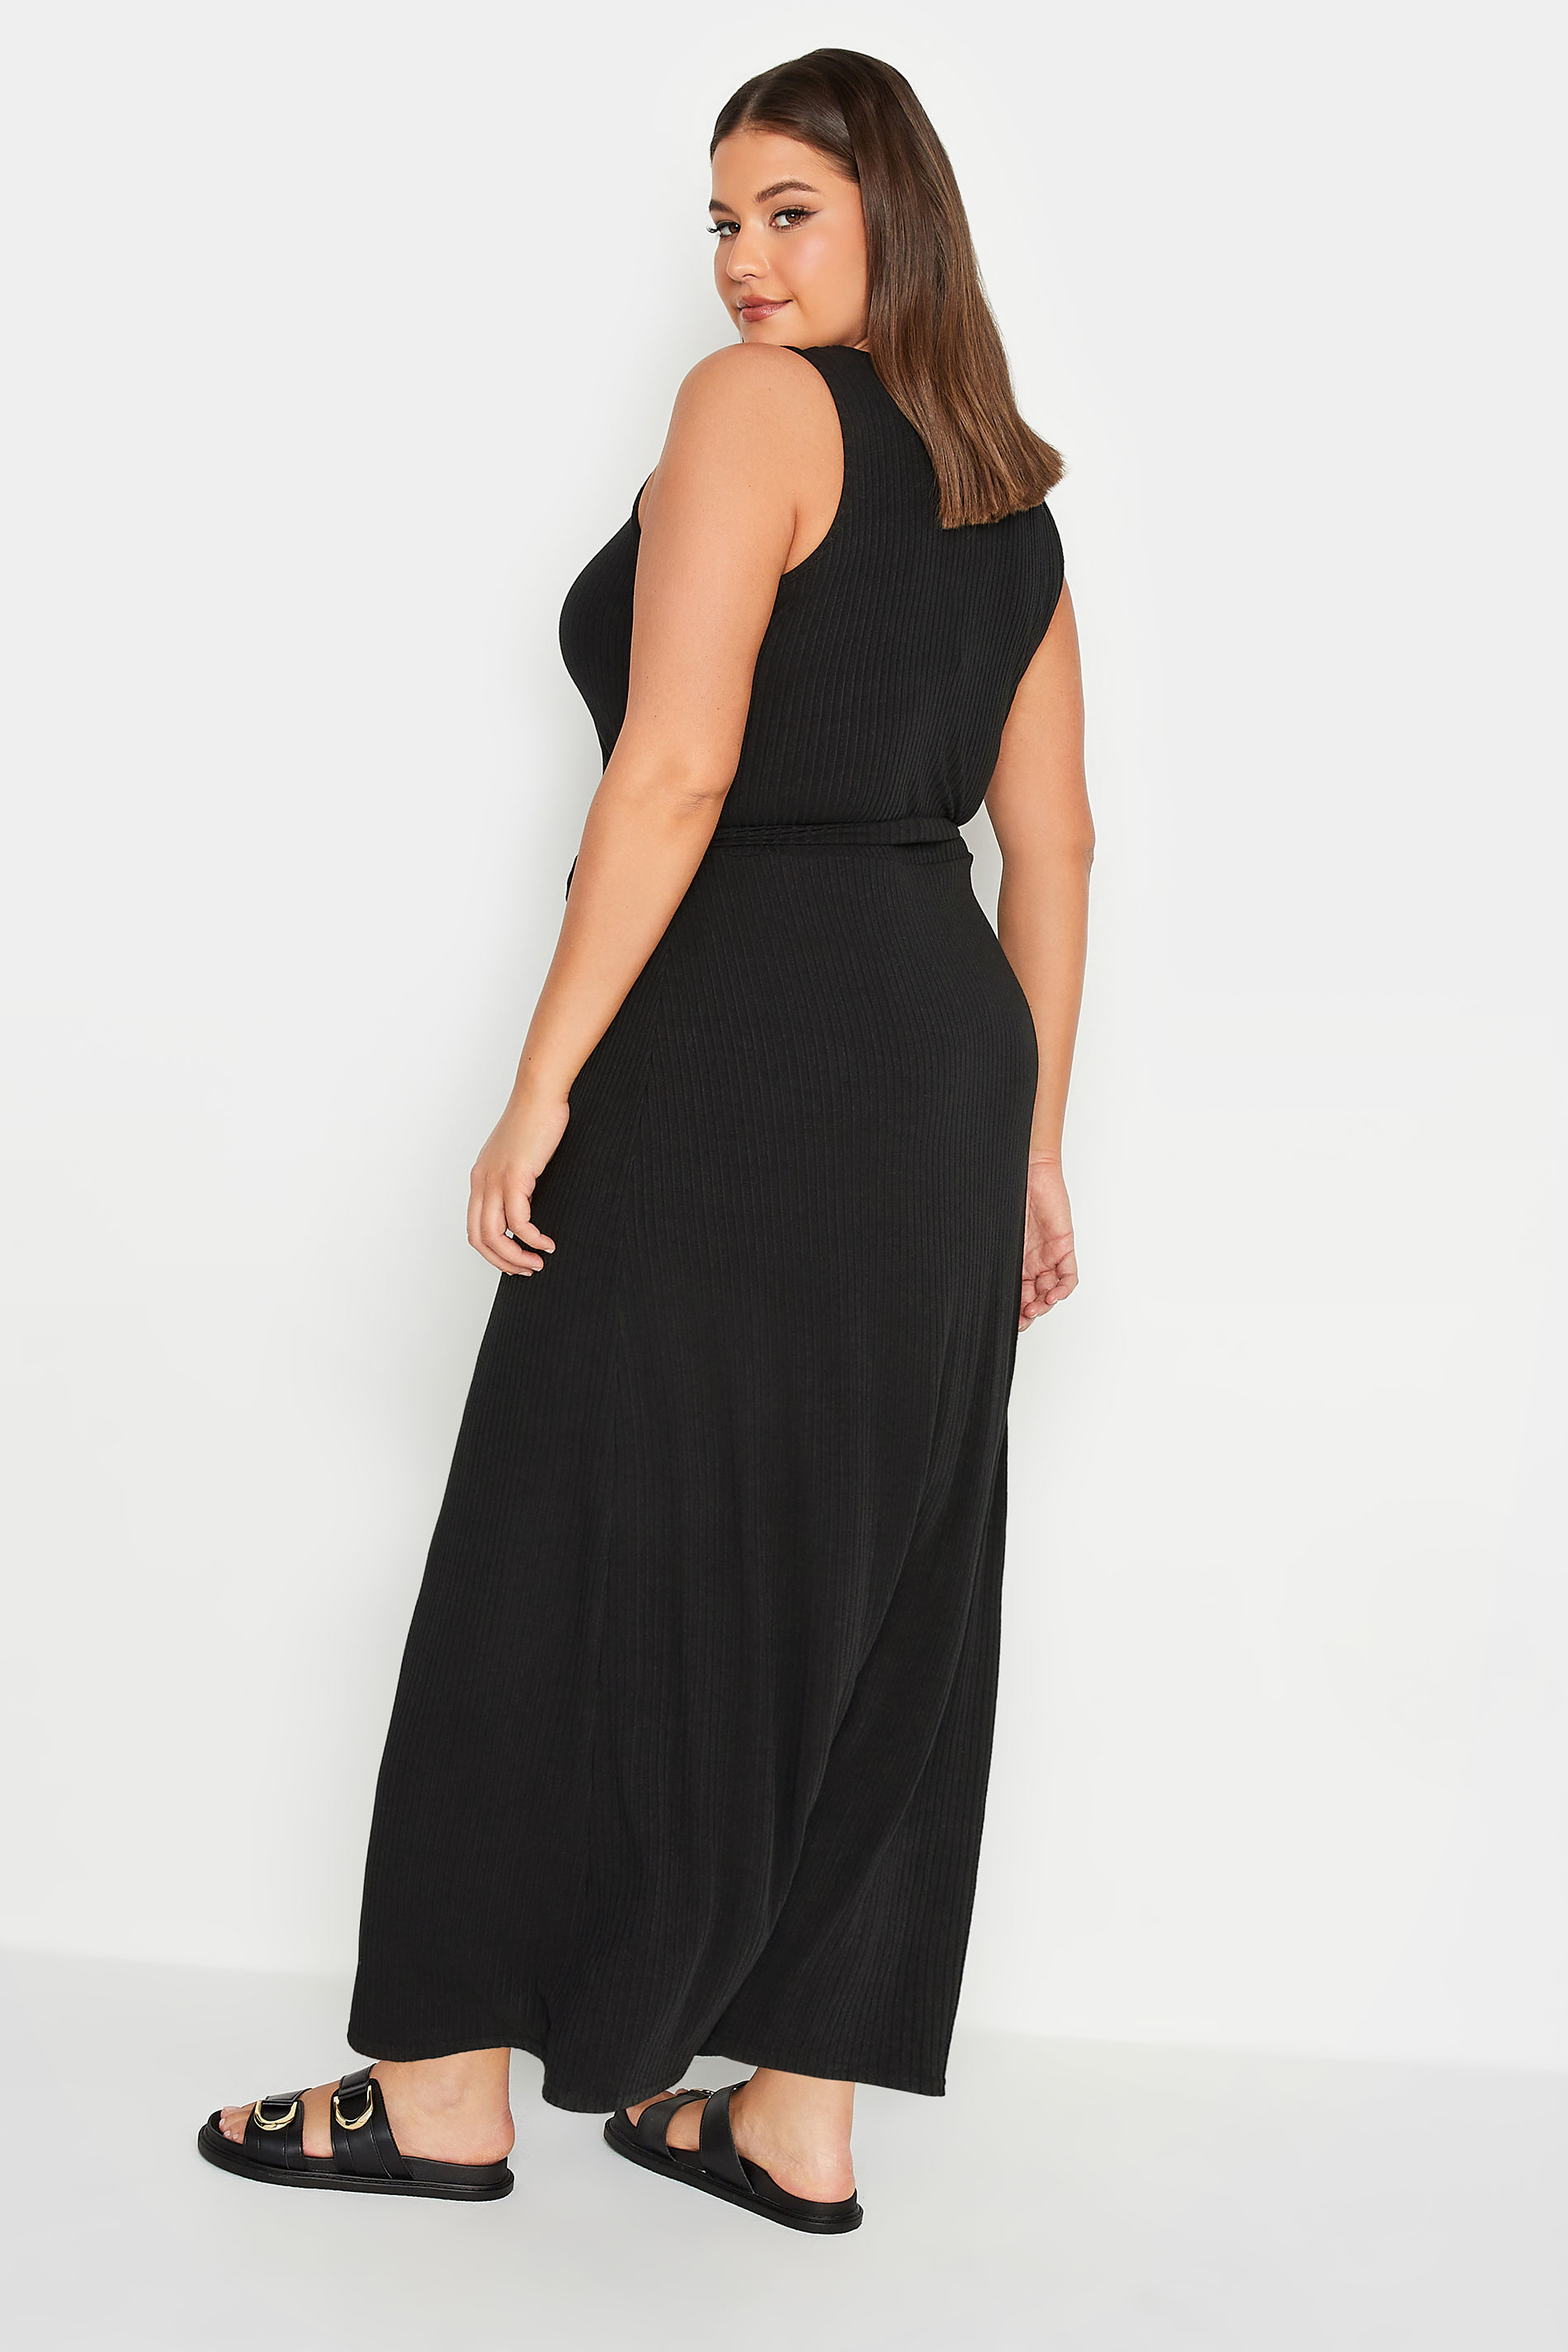 YOURS Plus Size Black Ribbed Sleeveless Maxi Dress | Yours Clothing 3